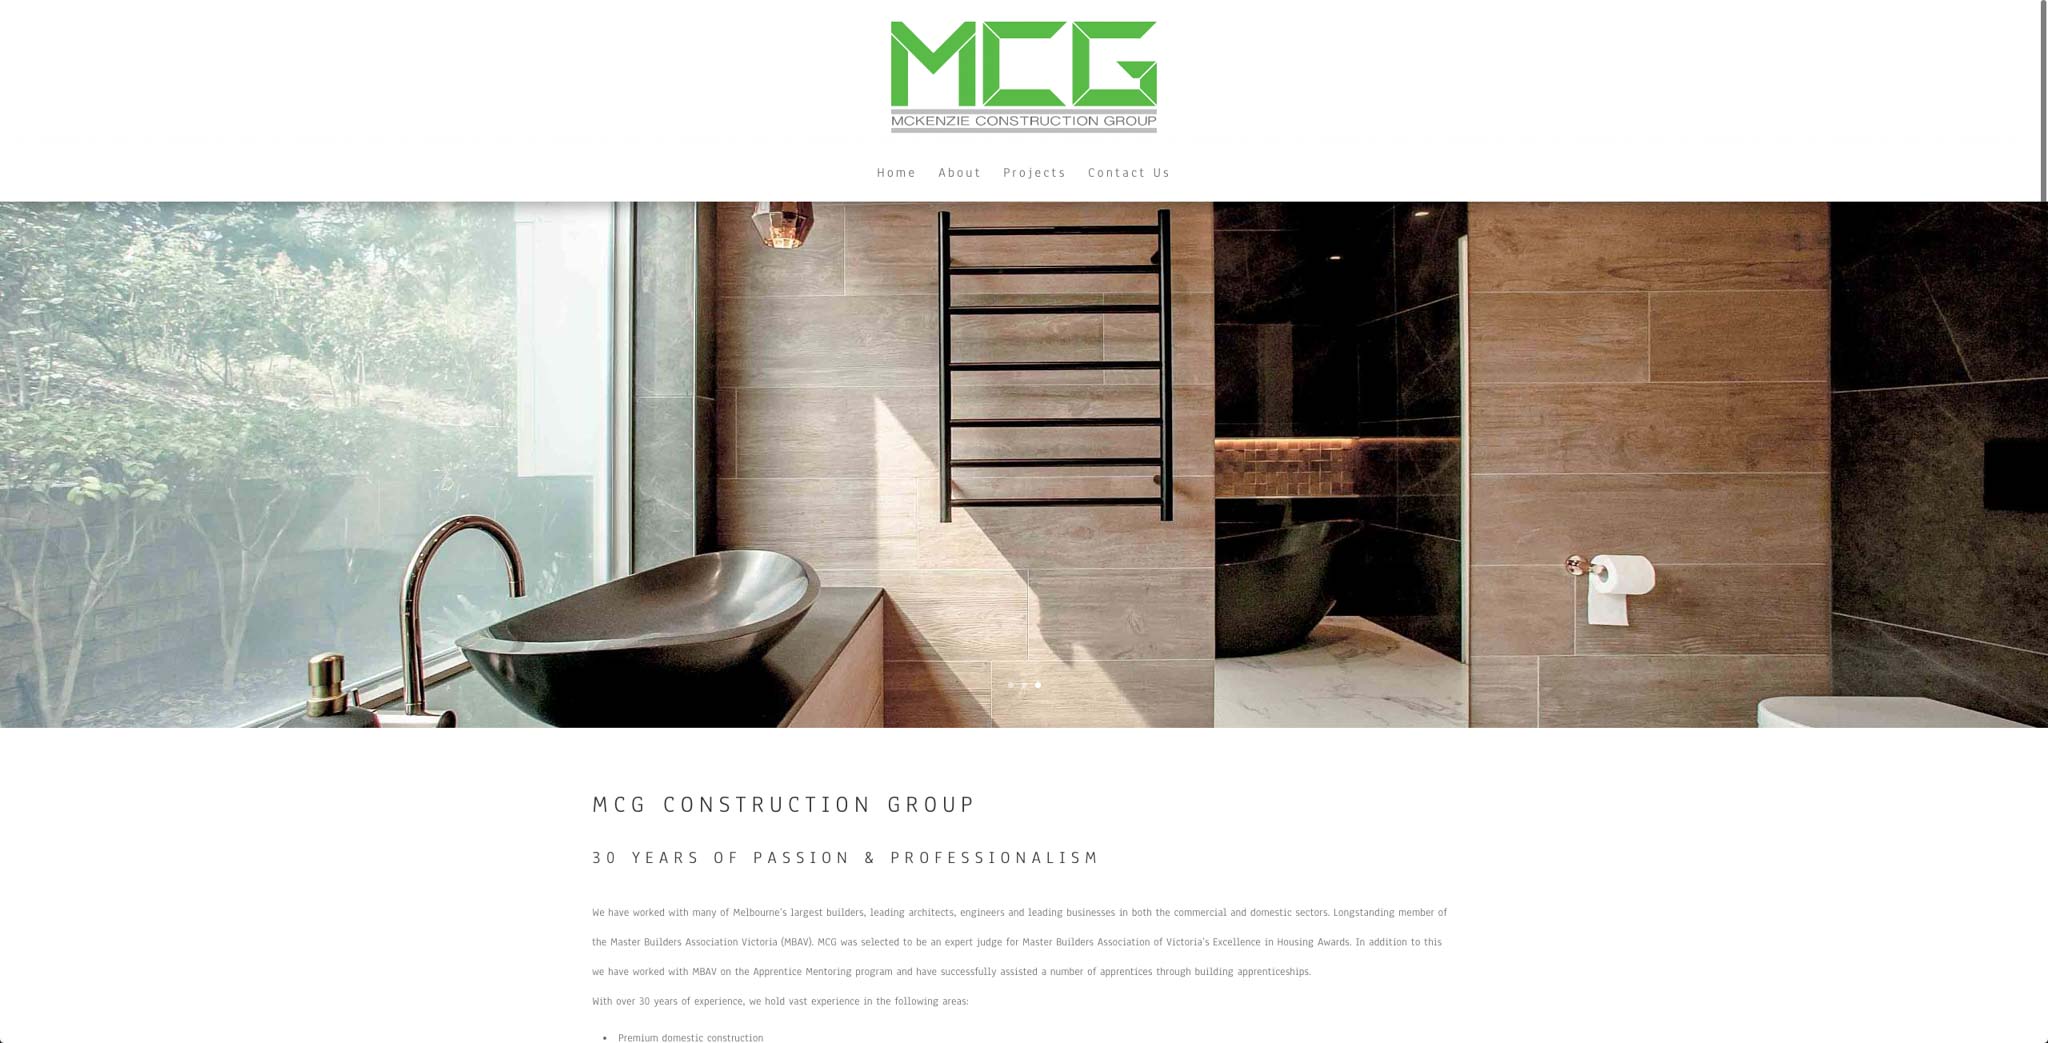 MCG Construction